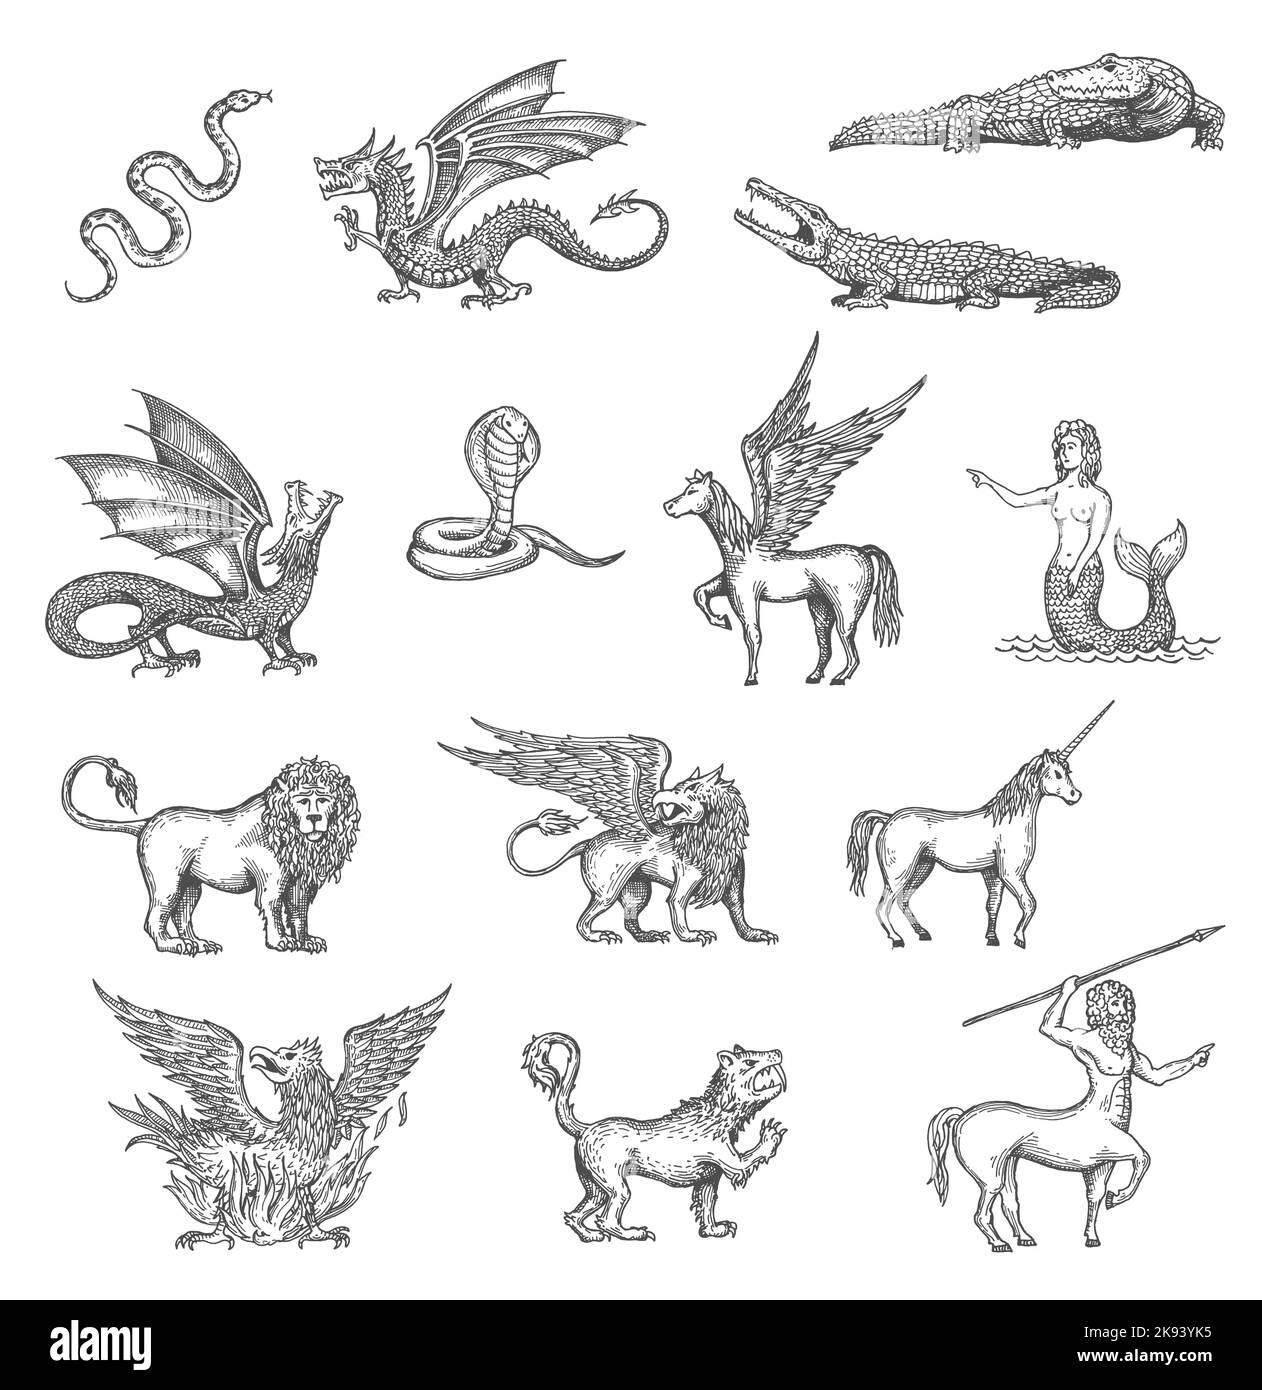 Unicorn, phoenix, dragon and Pegasus, minotaur or lion mermaid animal vector sketch. Crocodile, snake, griffin and werewolf, gryphon and centaur in sketch, fantastic mythology animal creatures Stock Vector